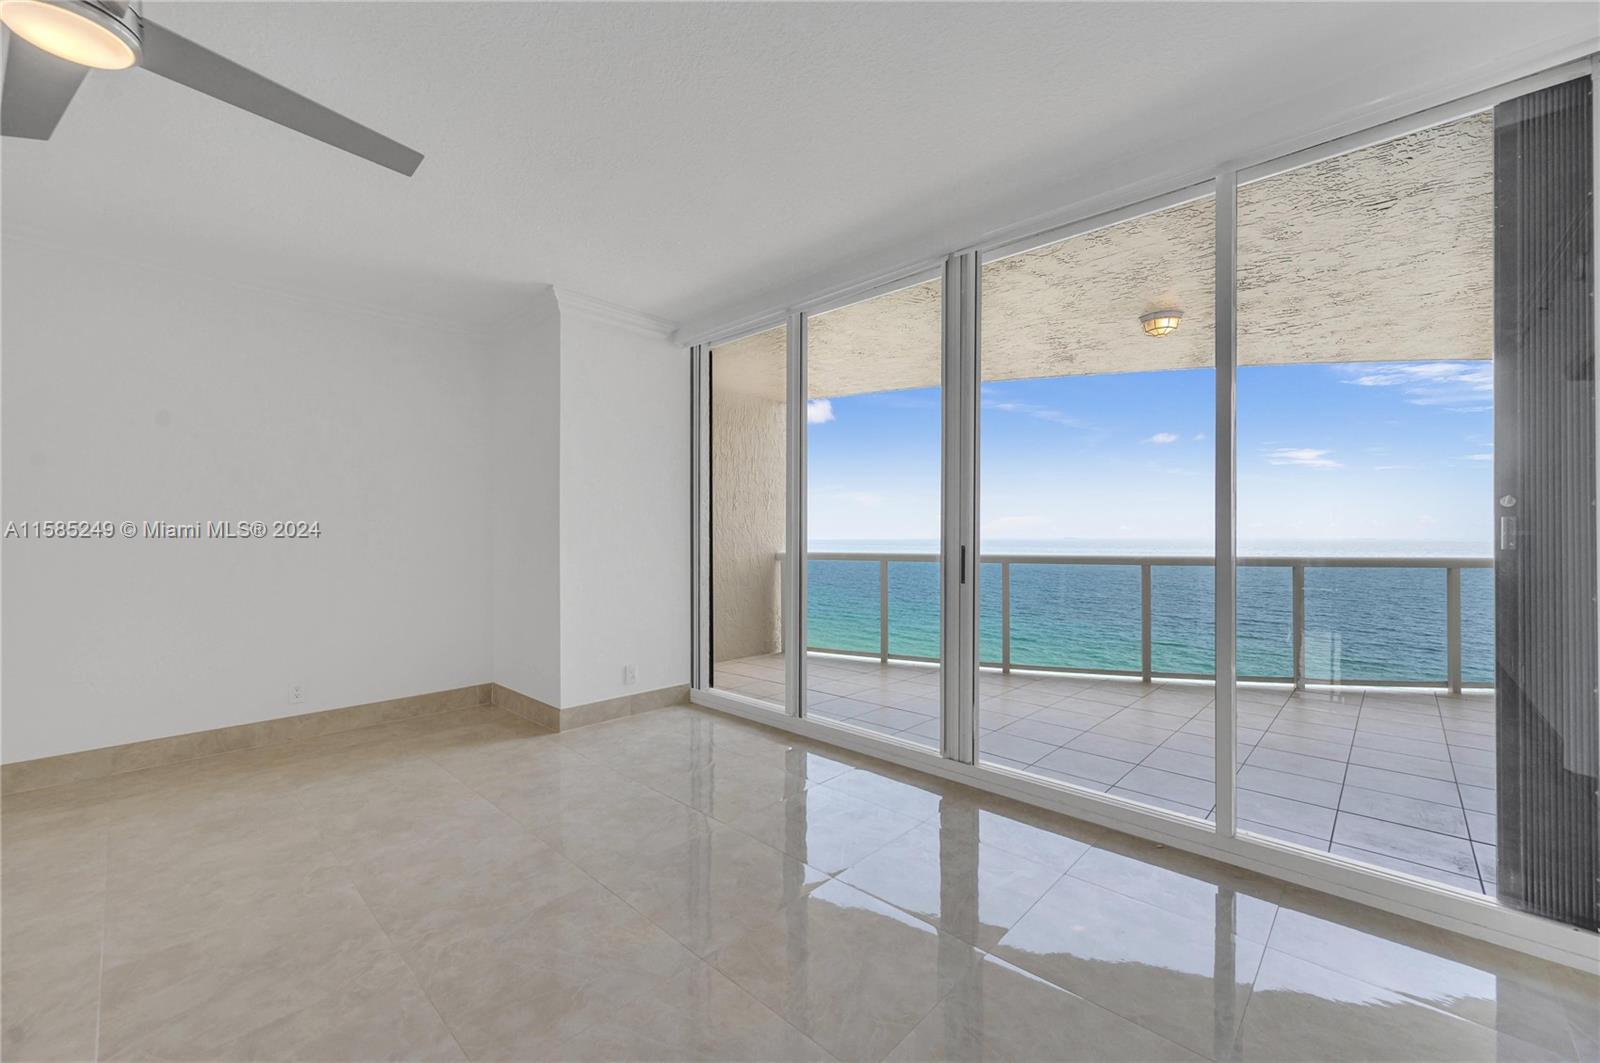 Rental Property at 3200 N Ocean Blvd 903, Fort Lauderdale, Broward County, Florida - Bedrooms: 3 
Bathrooms: 3  - $8,500 MO.